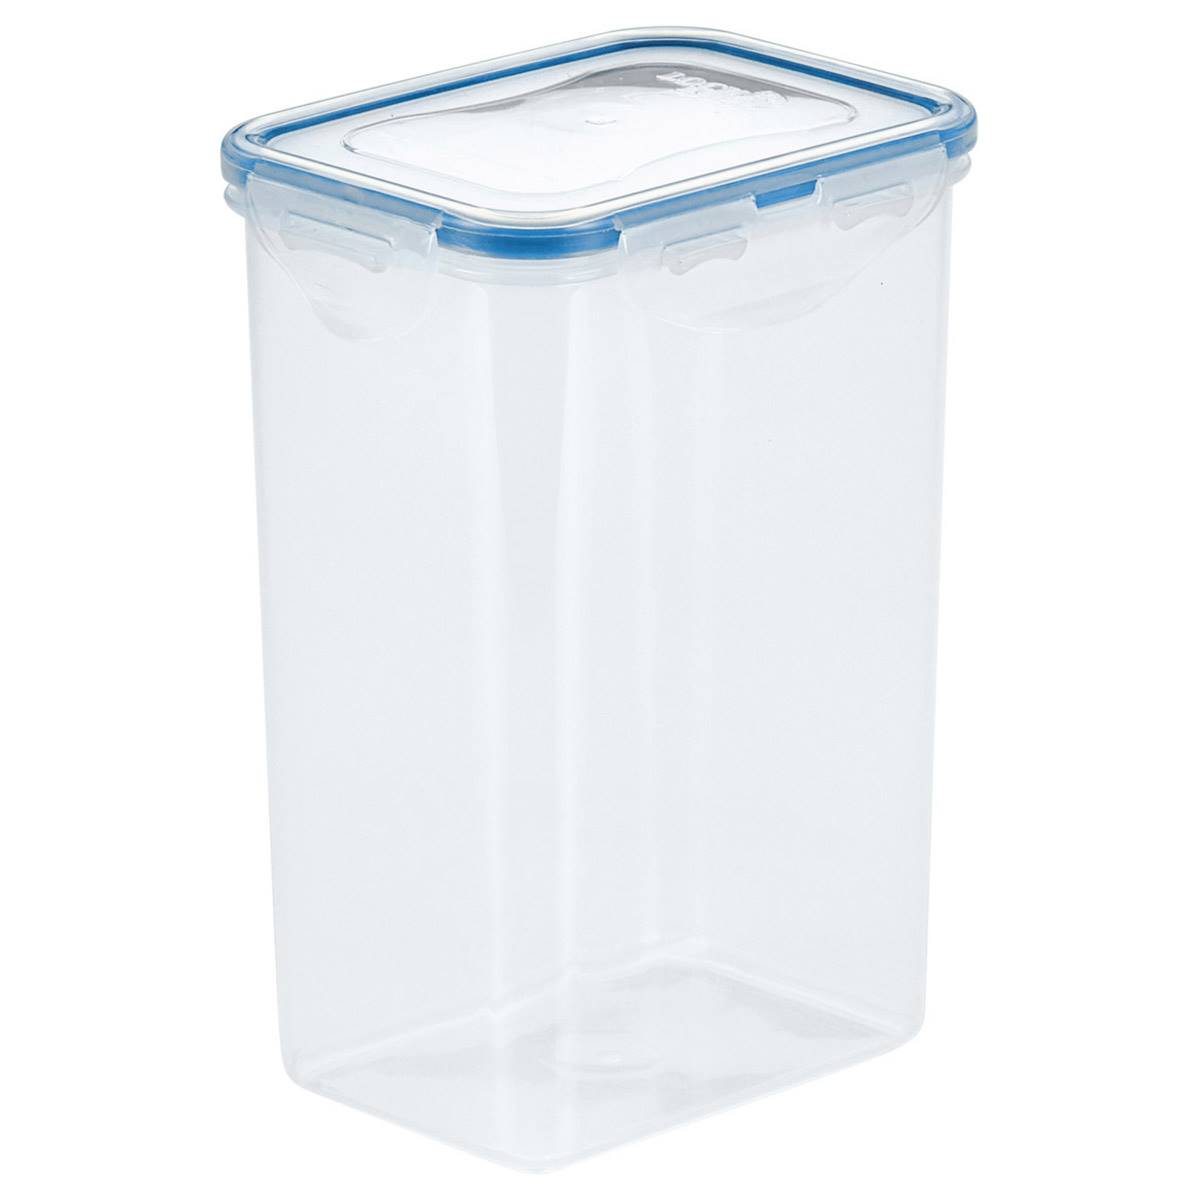 Lock & Lock Pantry 5.5 Cup Rectangular Food Storage Container